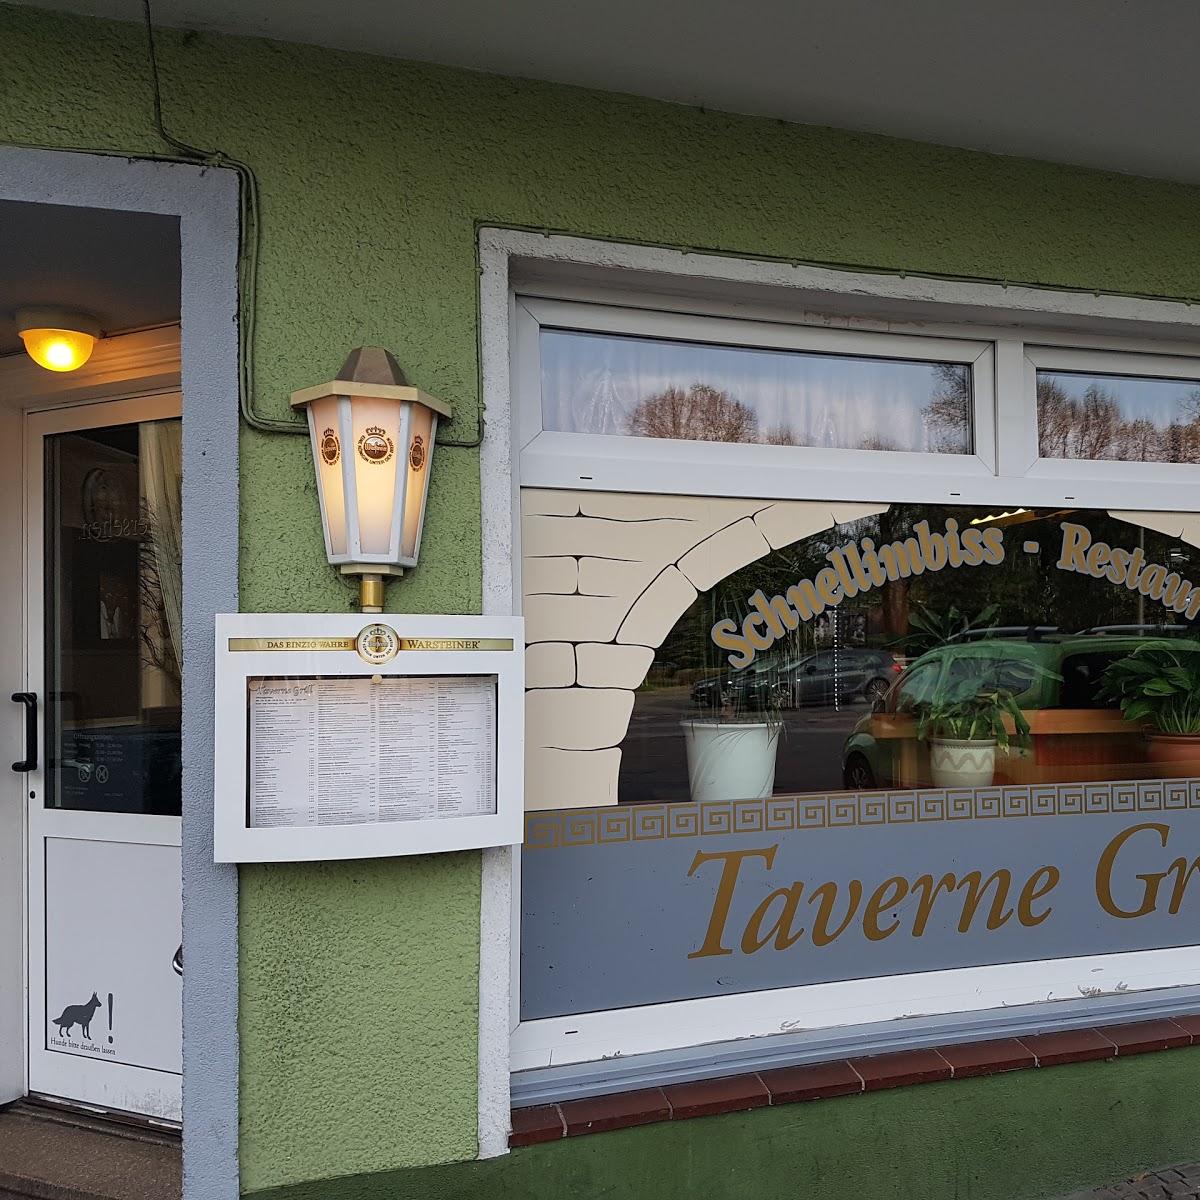 Restaurant "Taverne Grill" in Dortmund